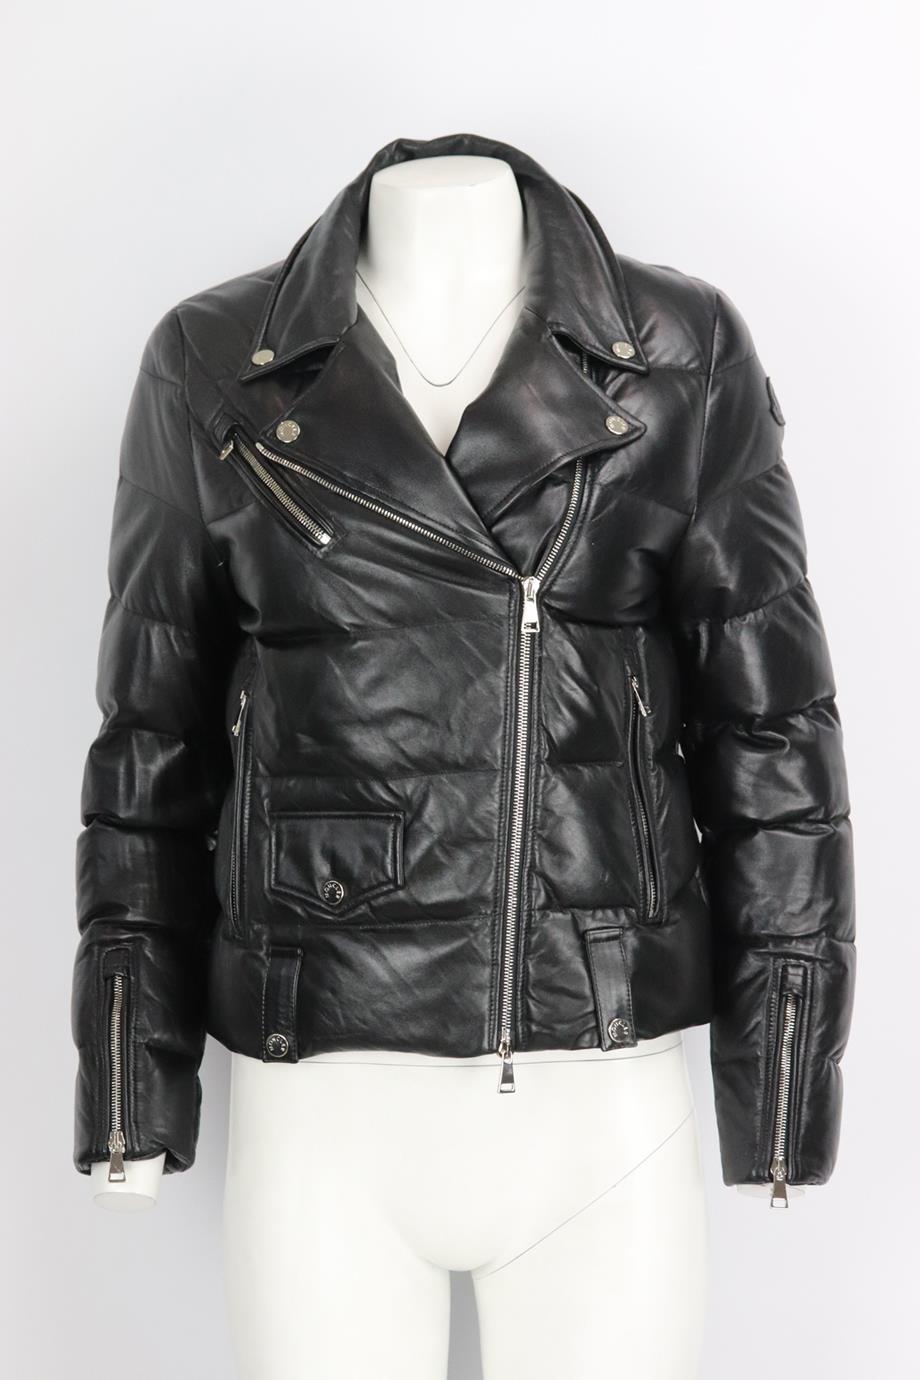 Moncler Adib quilted leather biker jacket. Black. Long sleeve, v-neck. Zip fastening at front. 100% Leather; lining: 100% Polyamide. Size: 1 (UK 8, US 4, FR 36, IT 40). Shoulder to shoulder: 15 in. Bust: 36 in. Waist: 36 in. Hips: 37 in. Length: 23